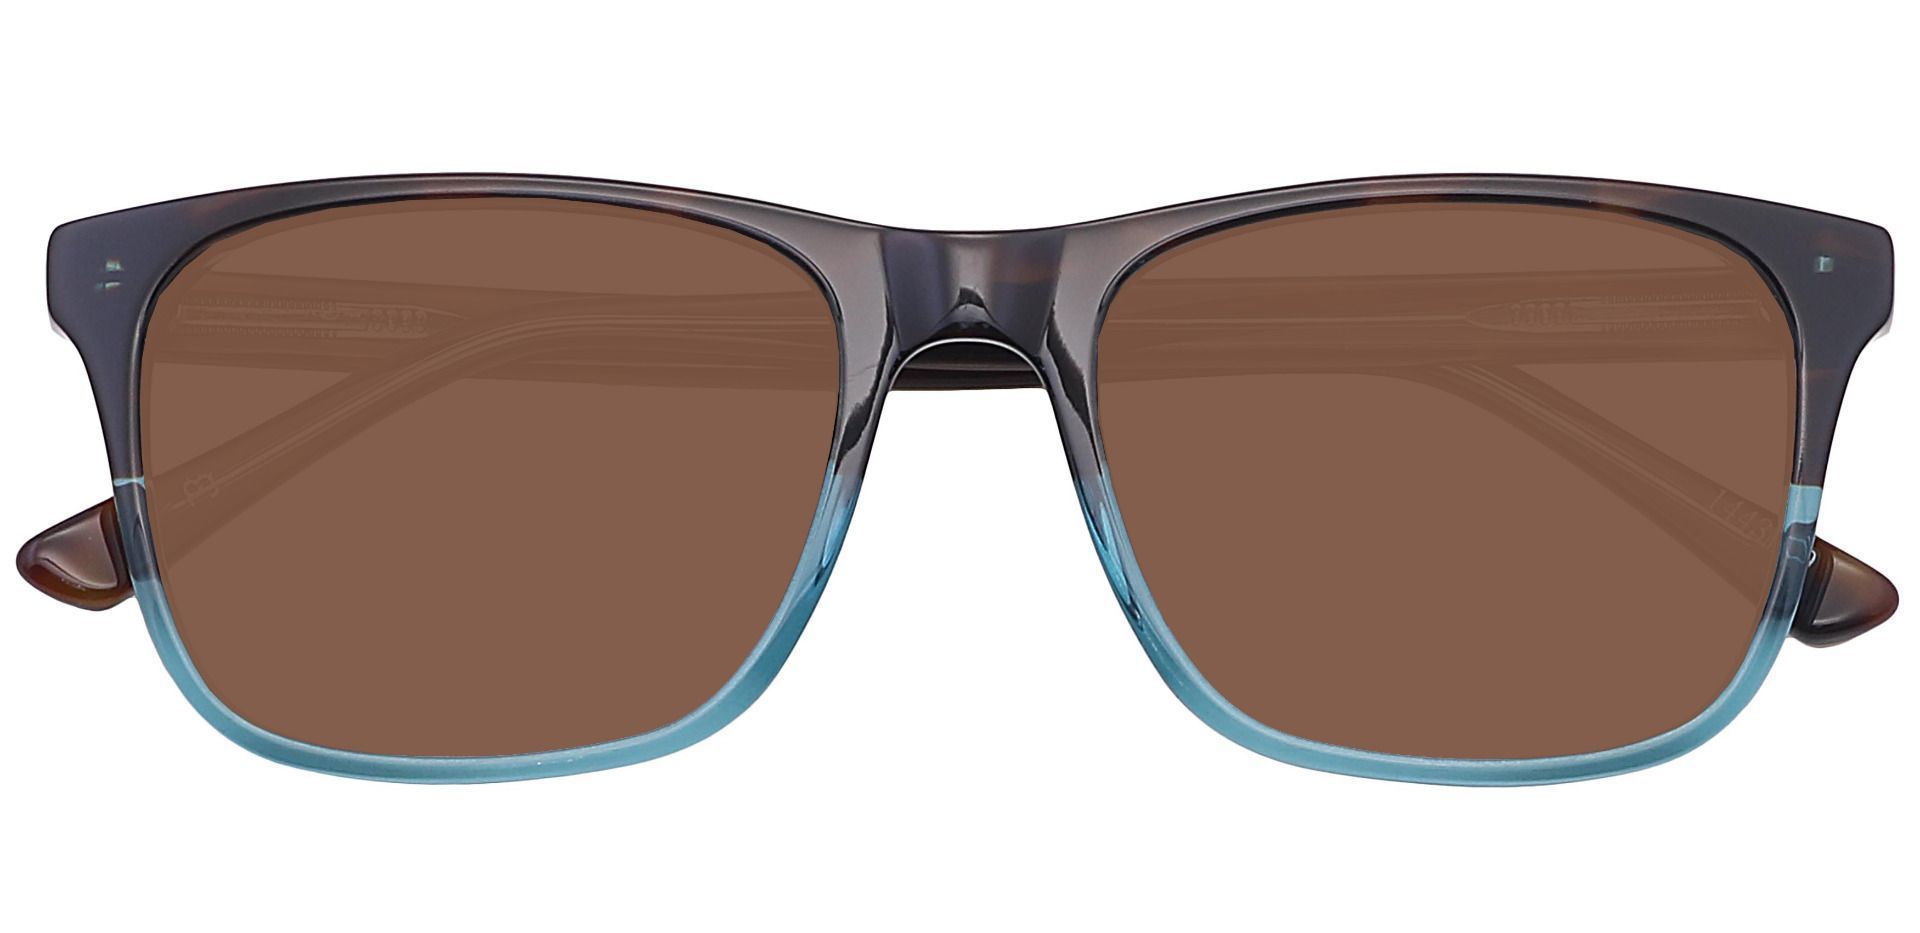 Cantina Square Non-Rx Sunglasses - Multi Color Frame With Brown Lenses